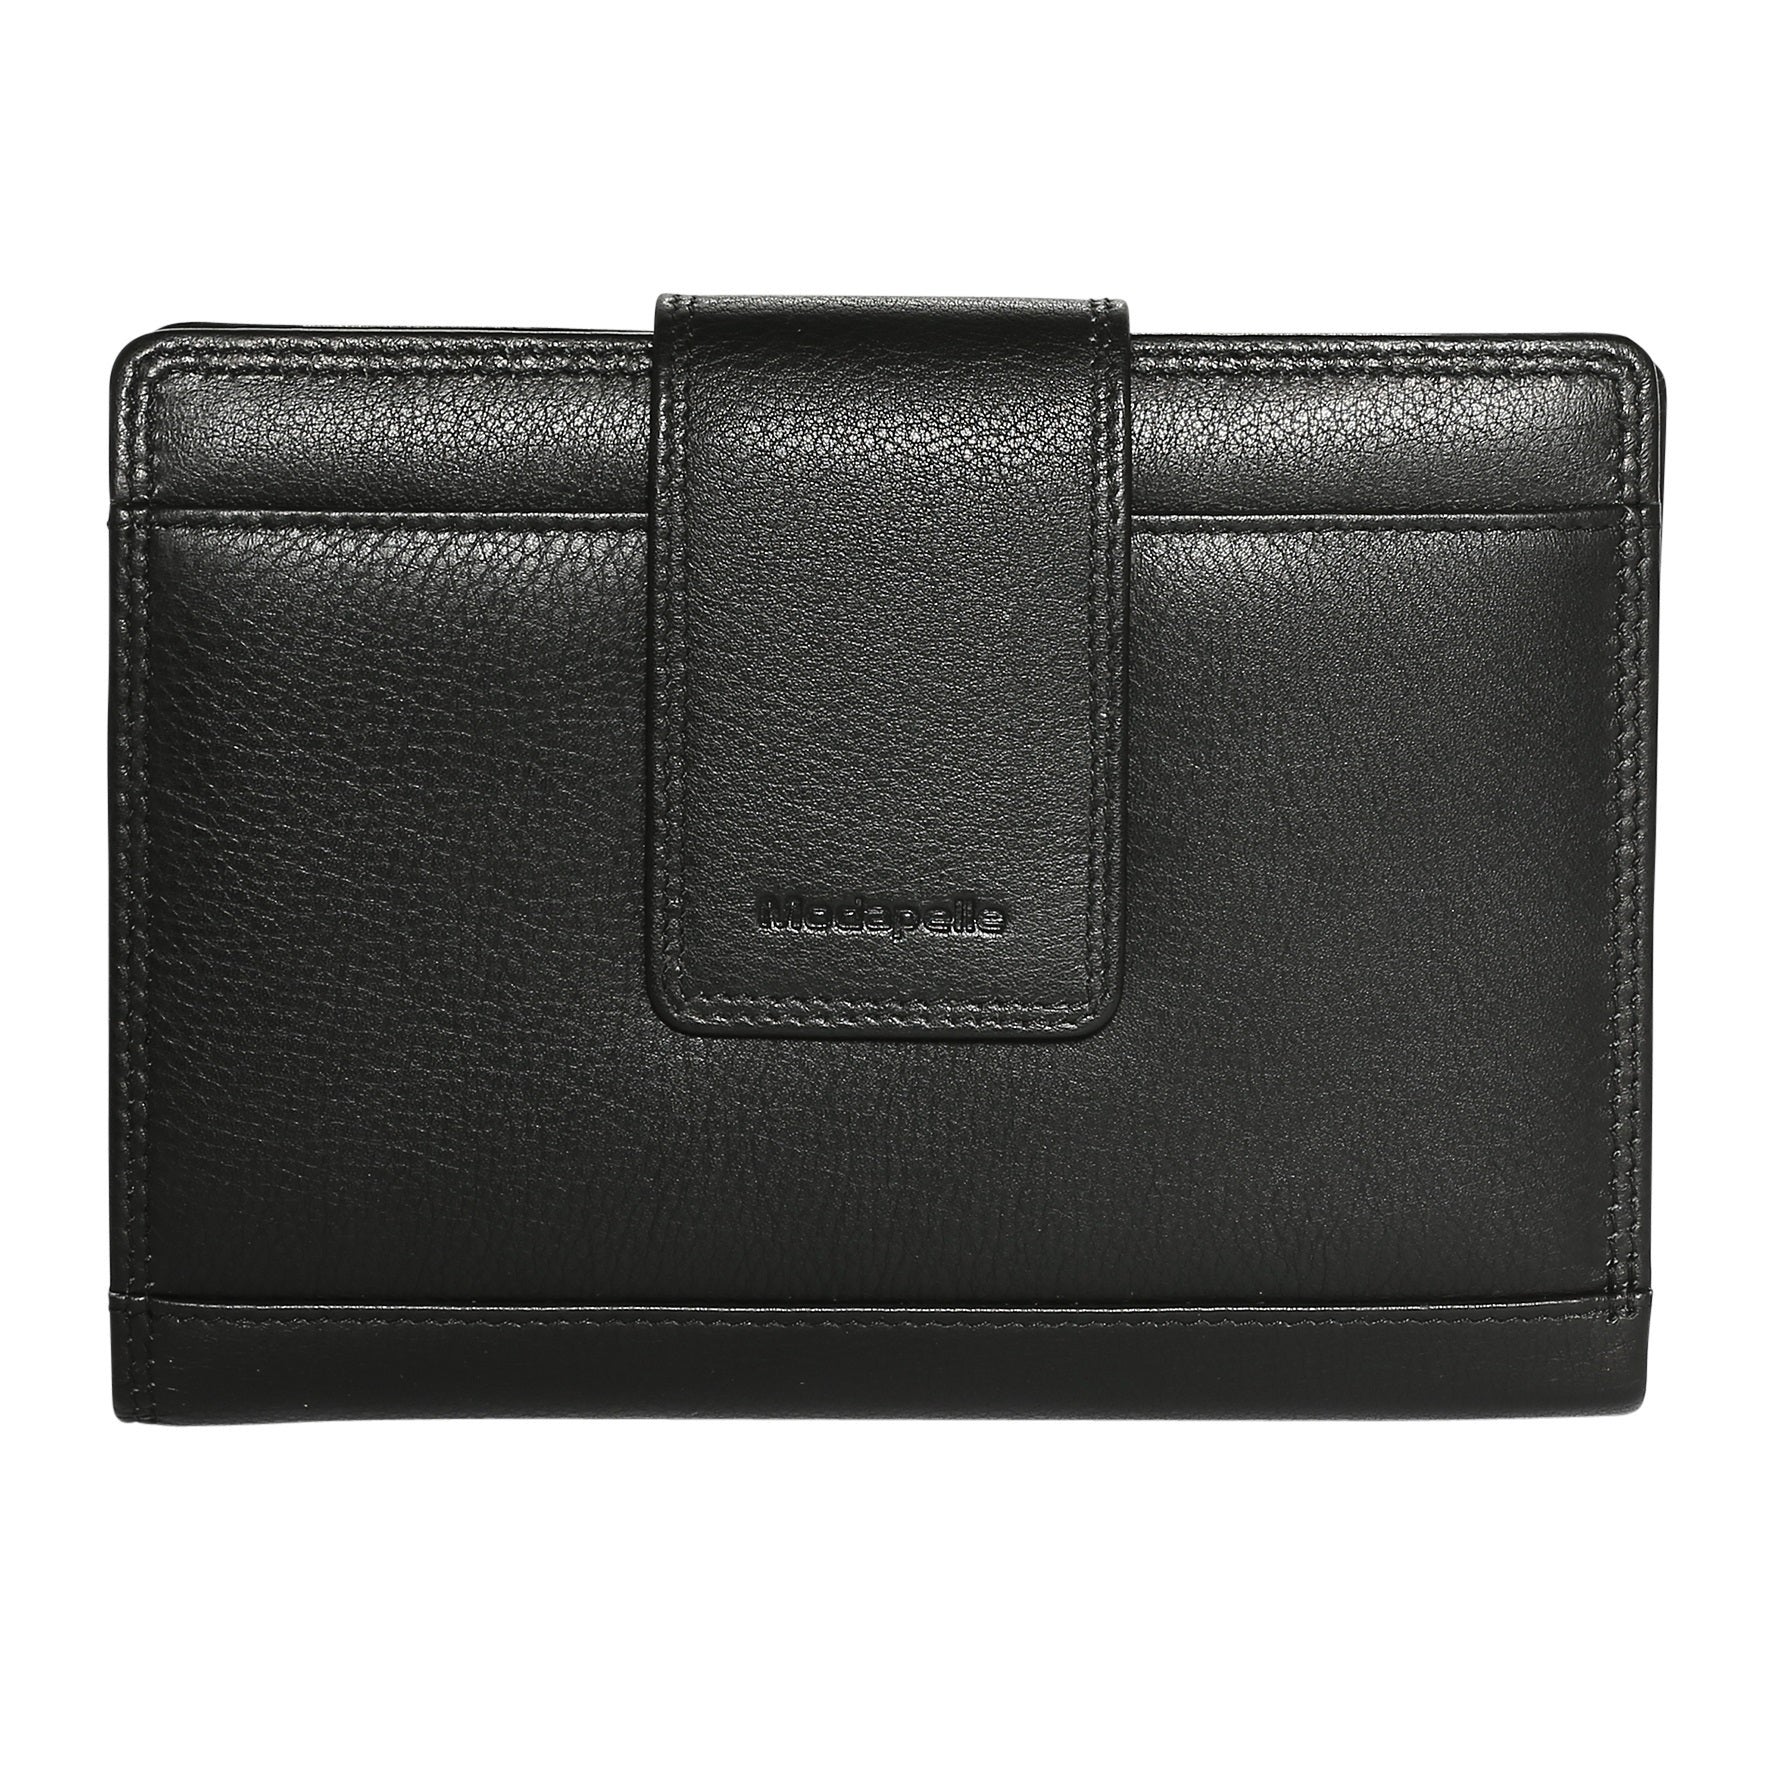 Modapelle - 7325 RFID Ladies Leather Purse - Black | Buy Clutches ...